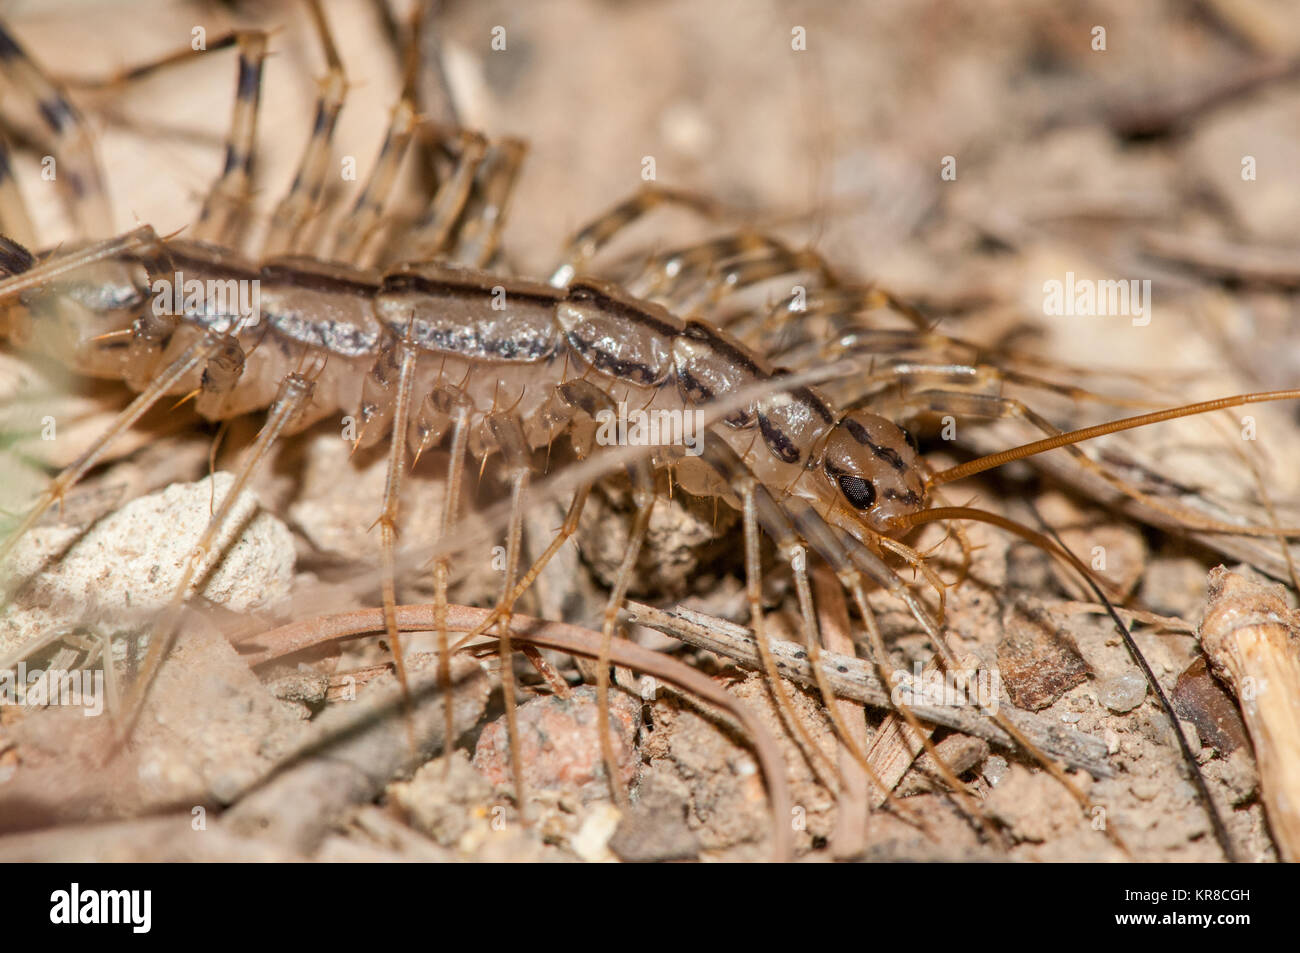 close-up view of house centipede (Scutigera coleoptrata) inthe forest Stock Photo